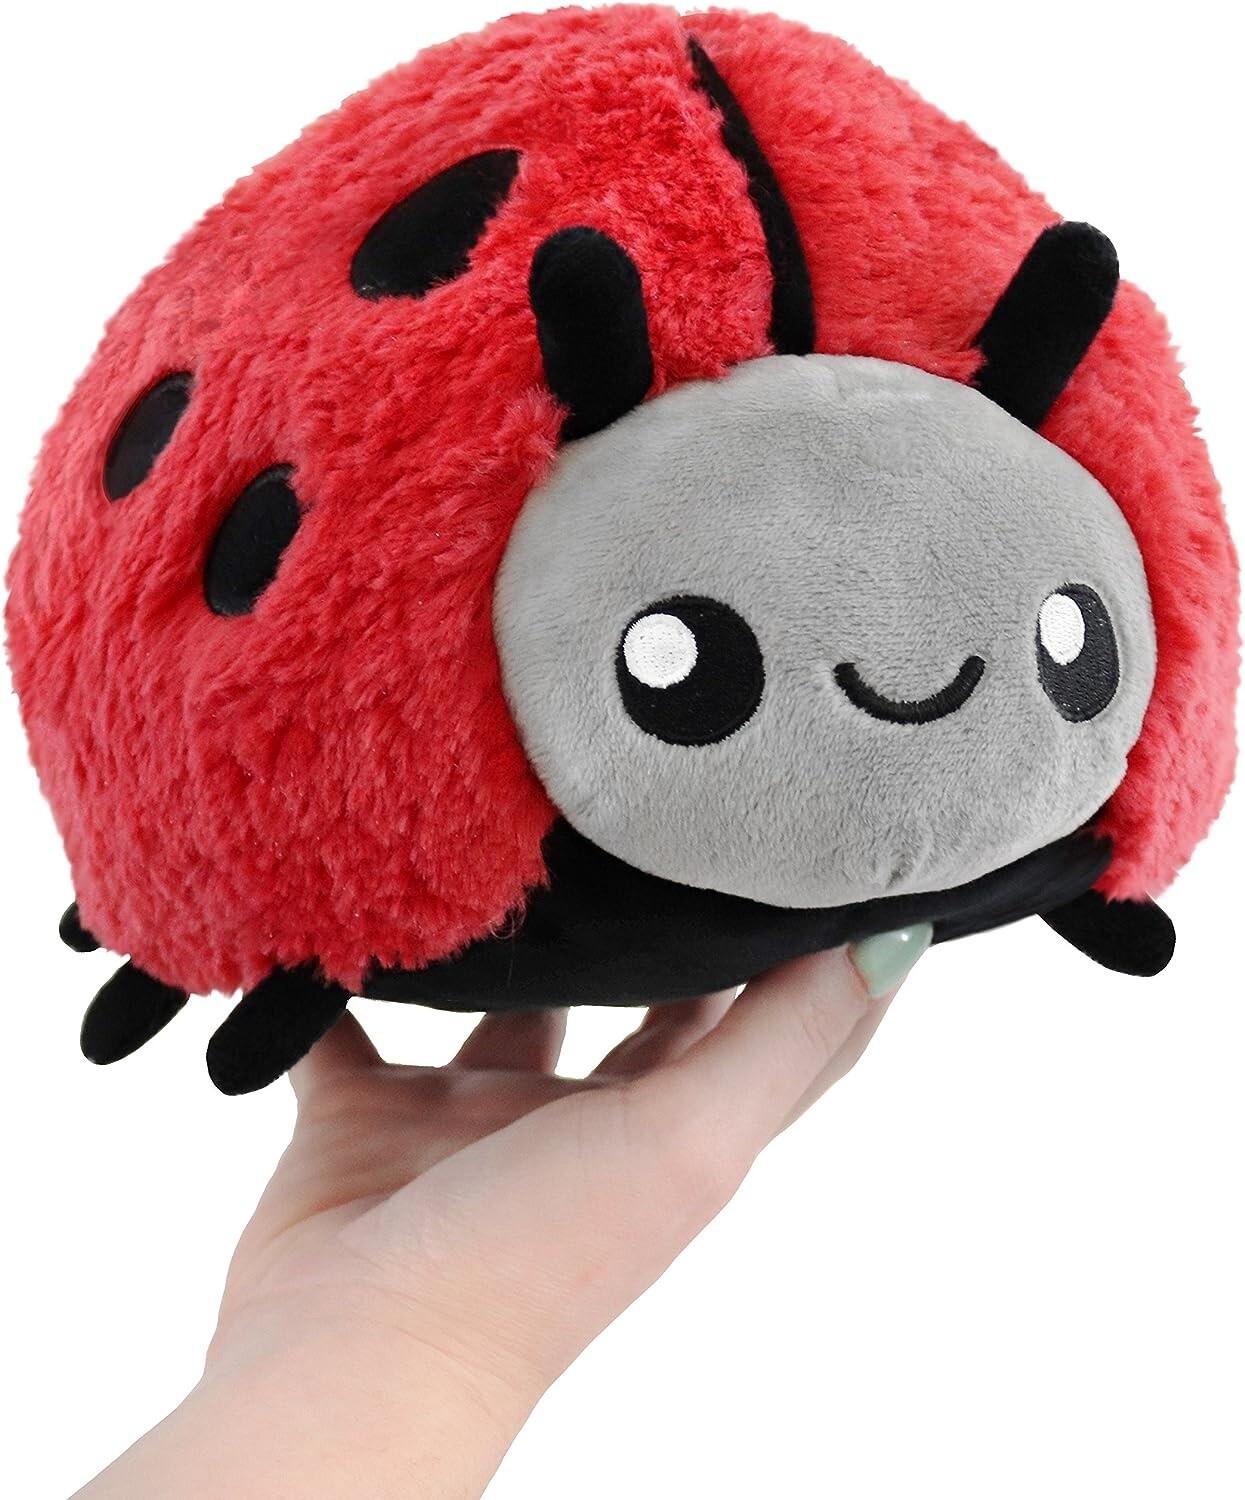 Mini Squishable Ladybug